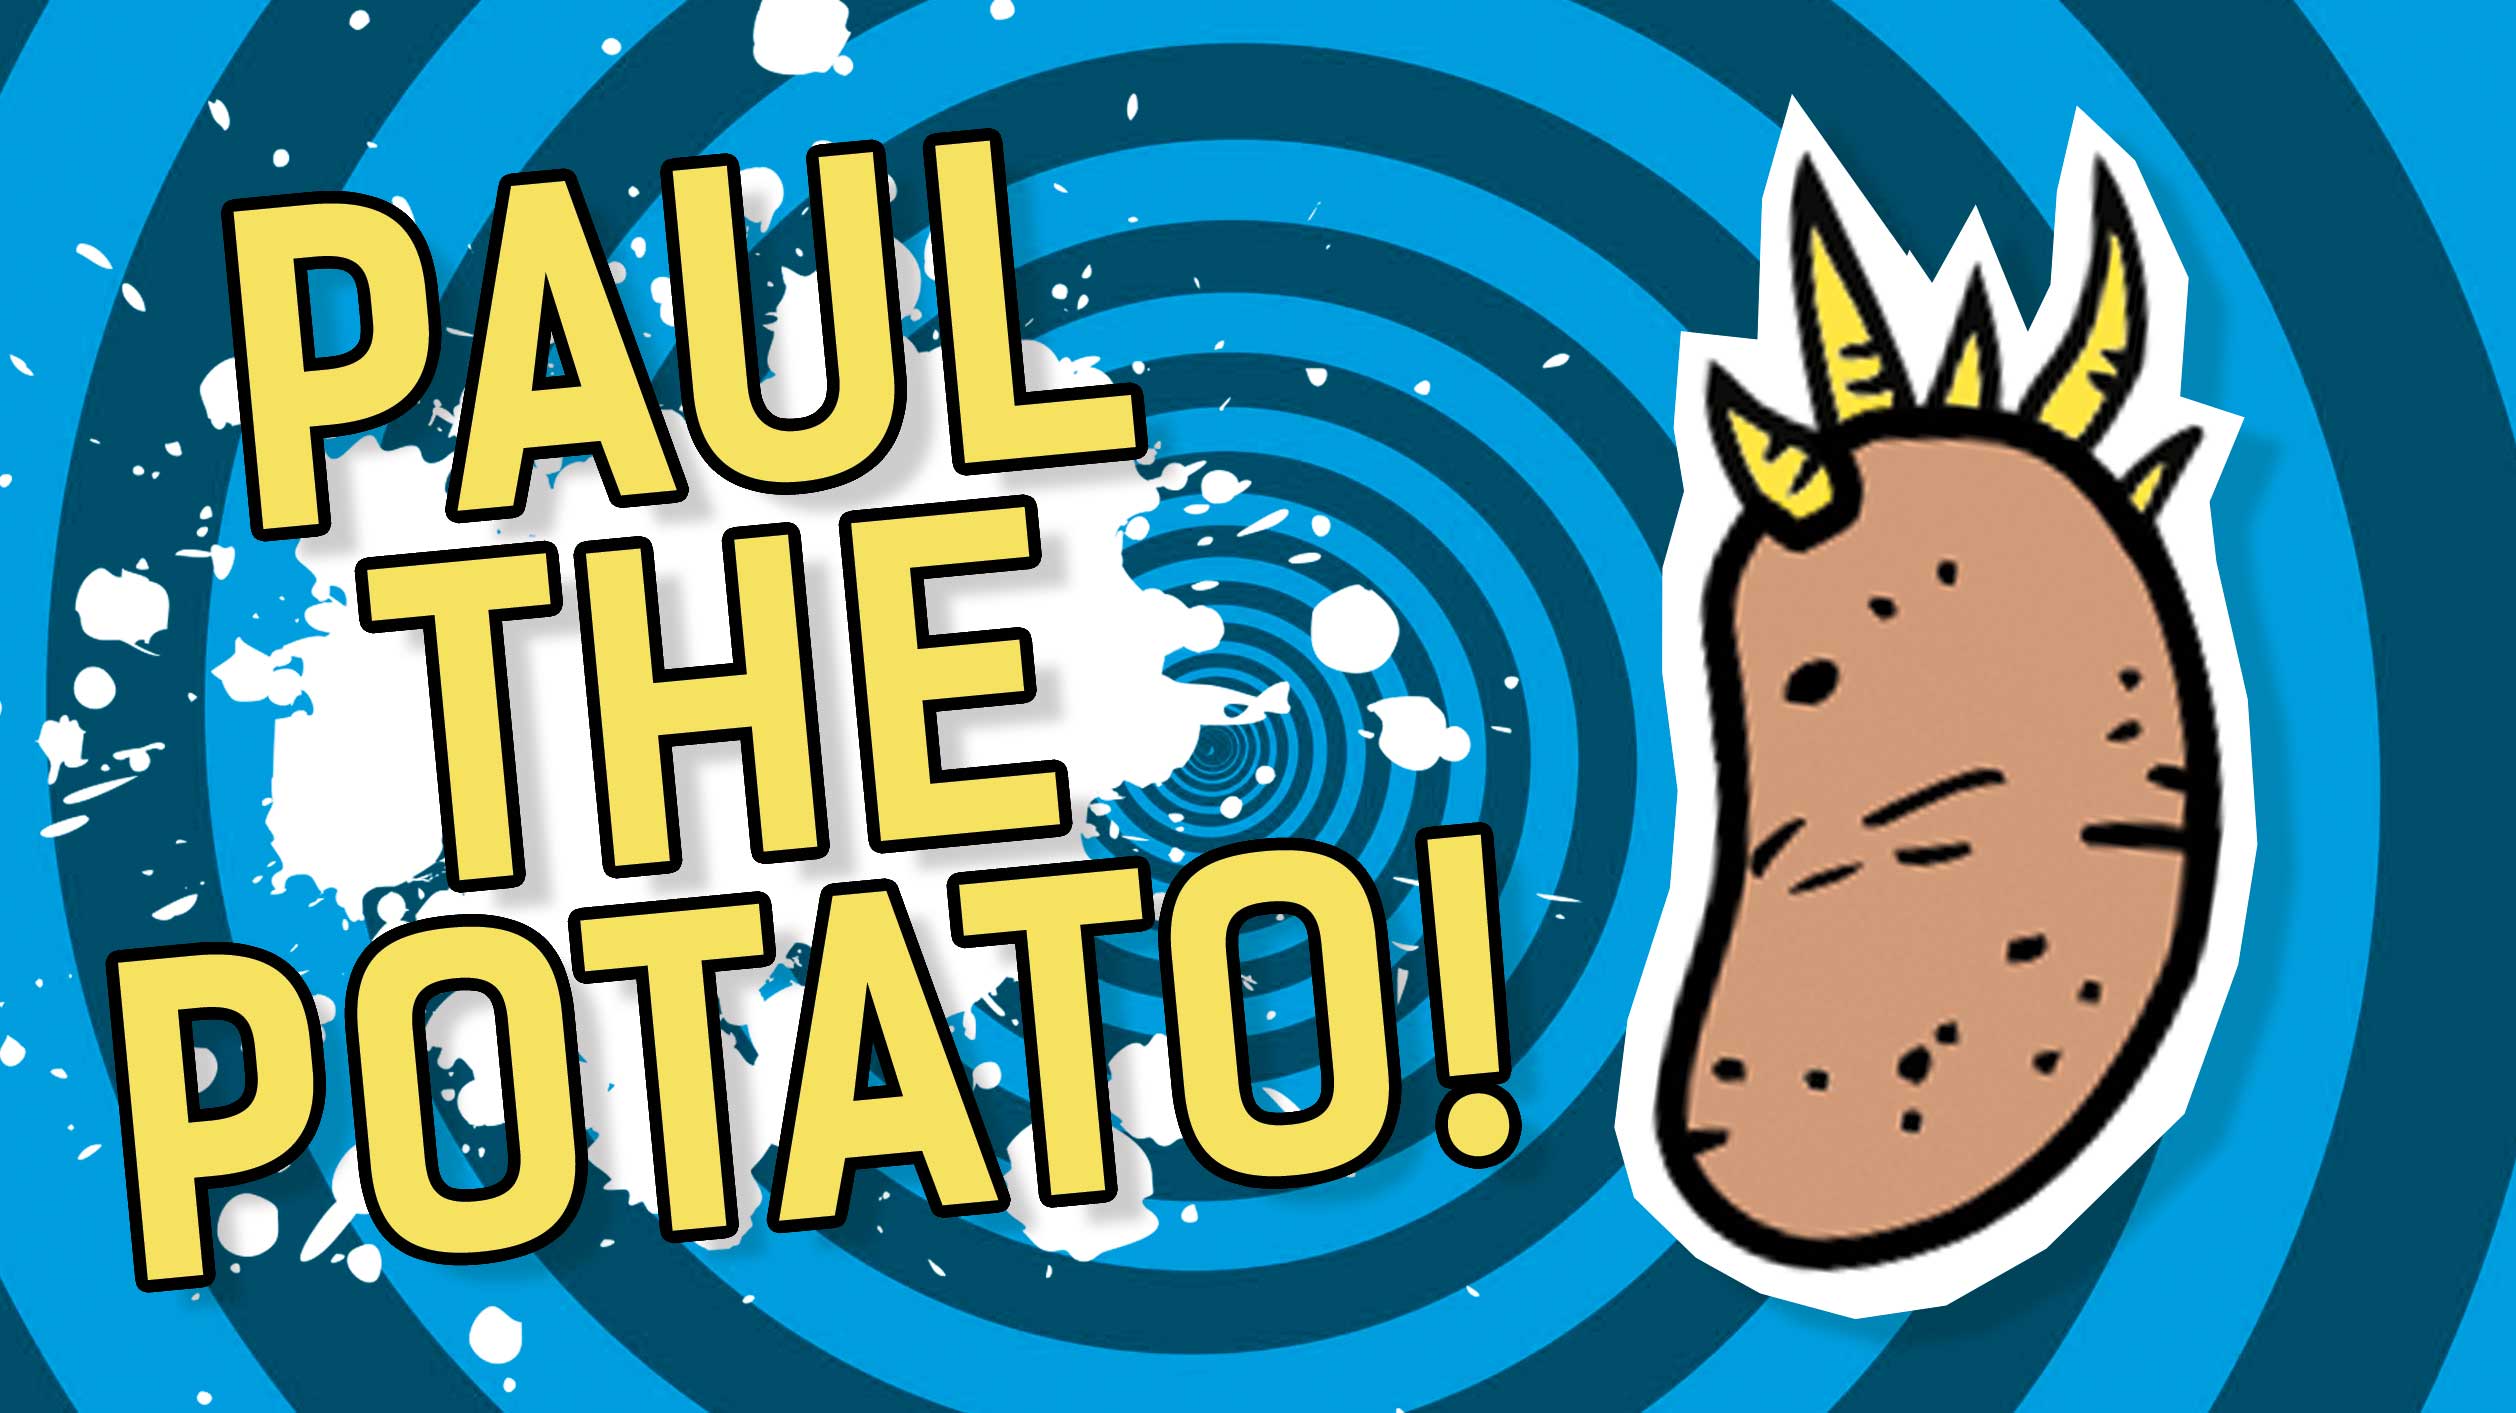 Result: Paul the Potato